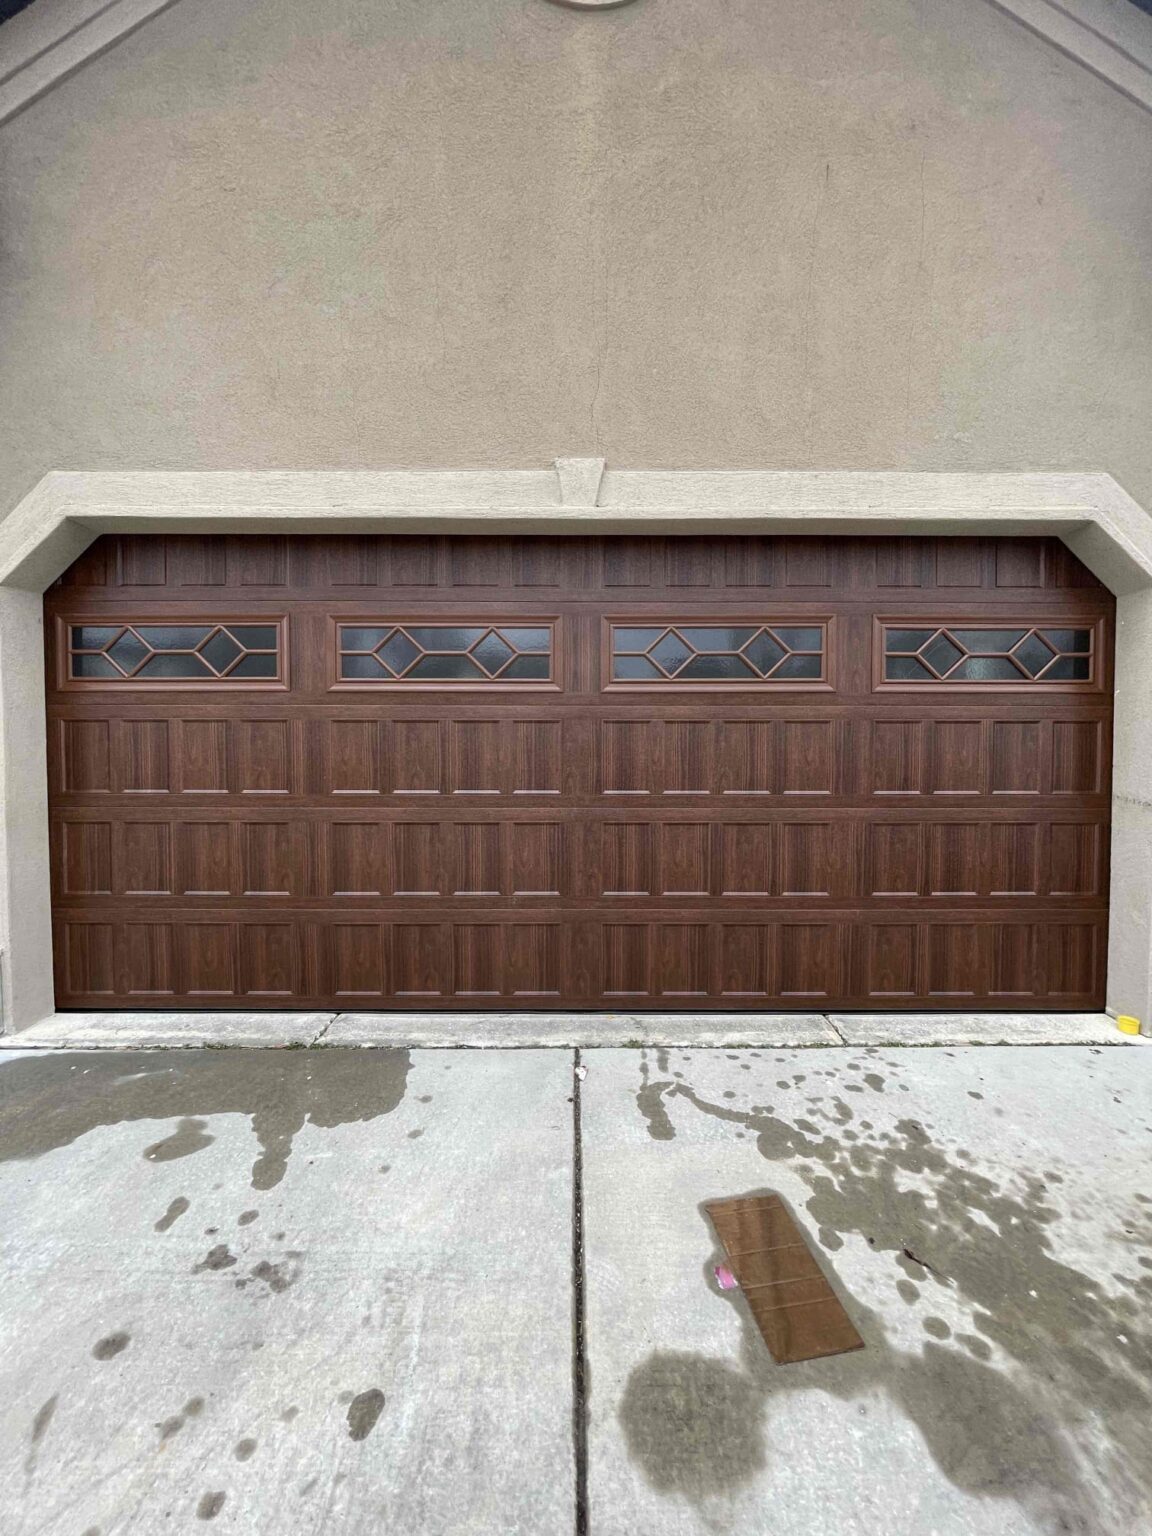 Garage Door Installation in Orem Utah . Amarr 16 x 7'6 Heritage 1000, Recessed Panel Design, Color: Woodgrain Walnut, windows: Waterford w/Obscure glass